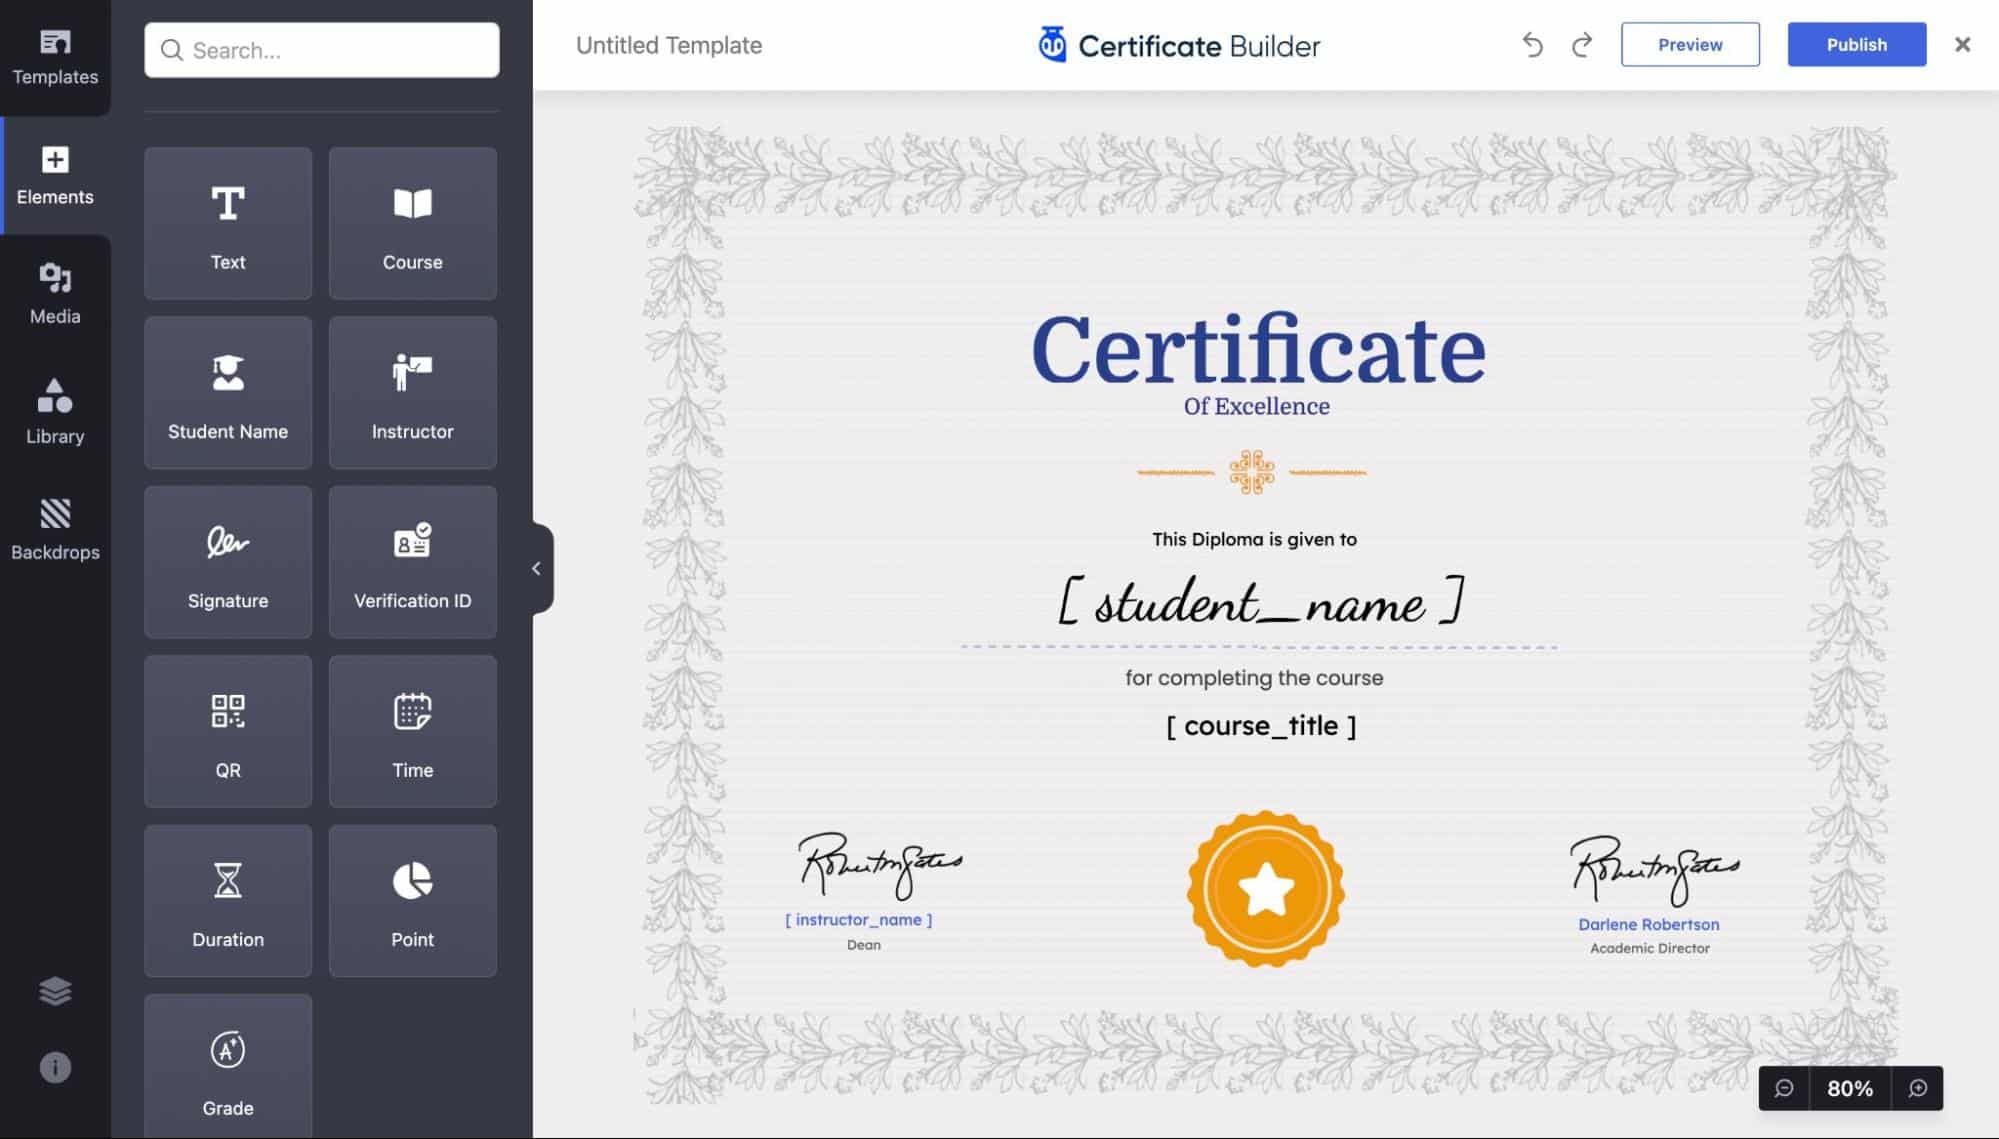 Tutor LMS Certificate Builder 